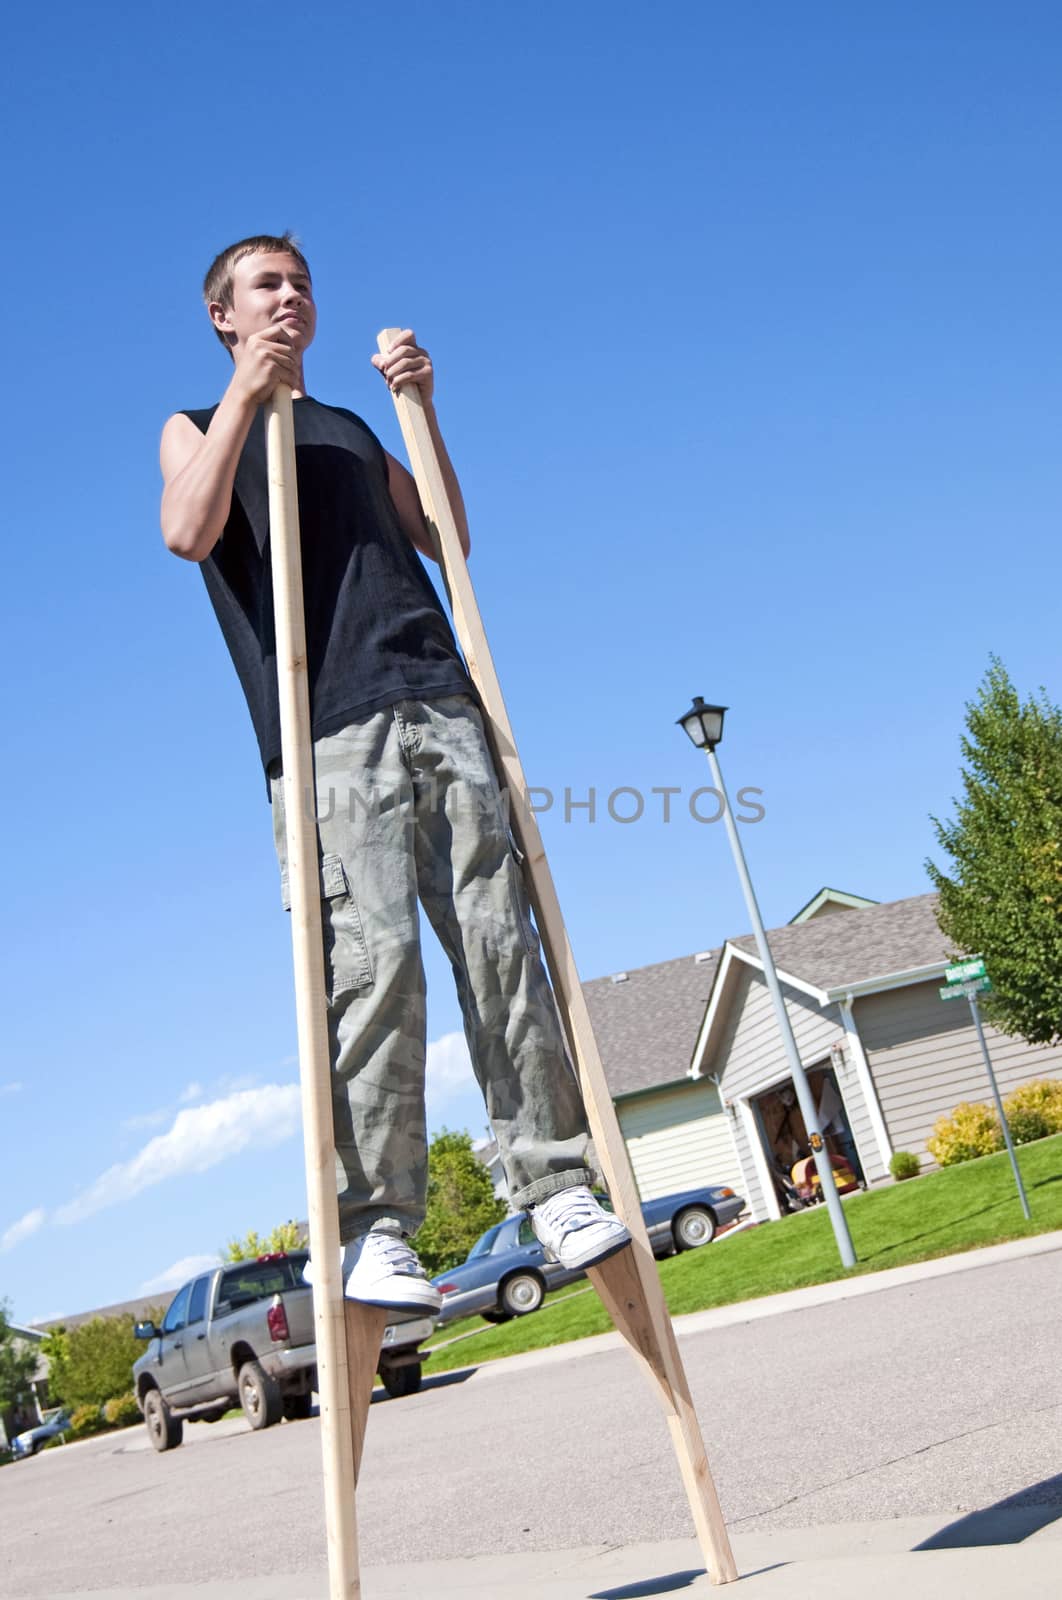 Teenage boy using stilts to walk around the neighborhood.